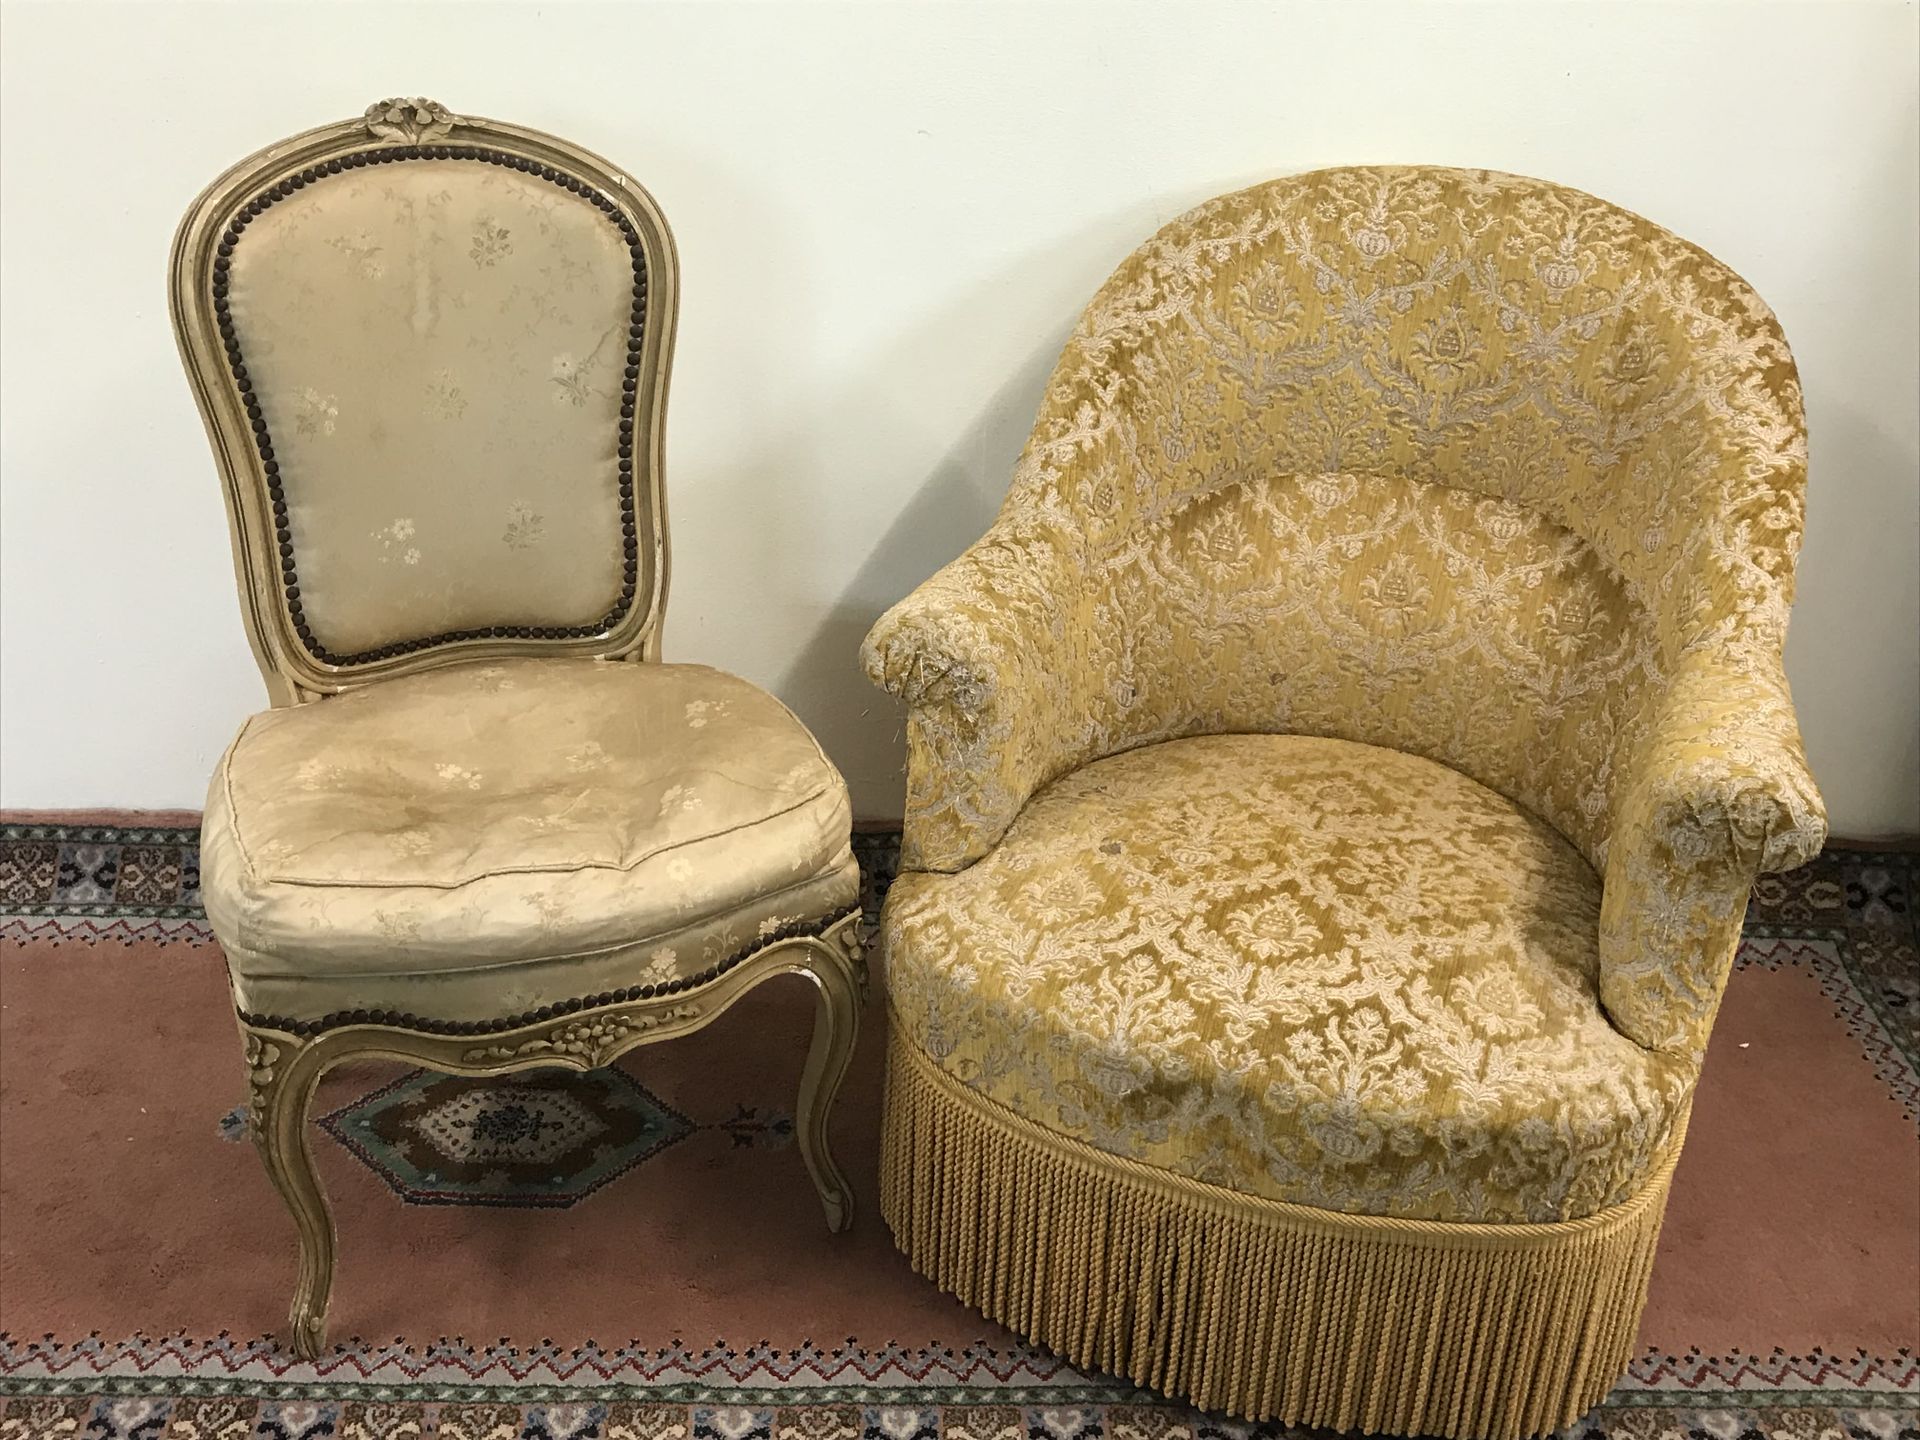 Null 蟾蜍扶手椅

黄色天鹅绒软垫

穿到天鹅绒

还有一张扶手椅，上面装饰着丝花（污渍）。